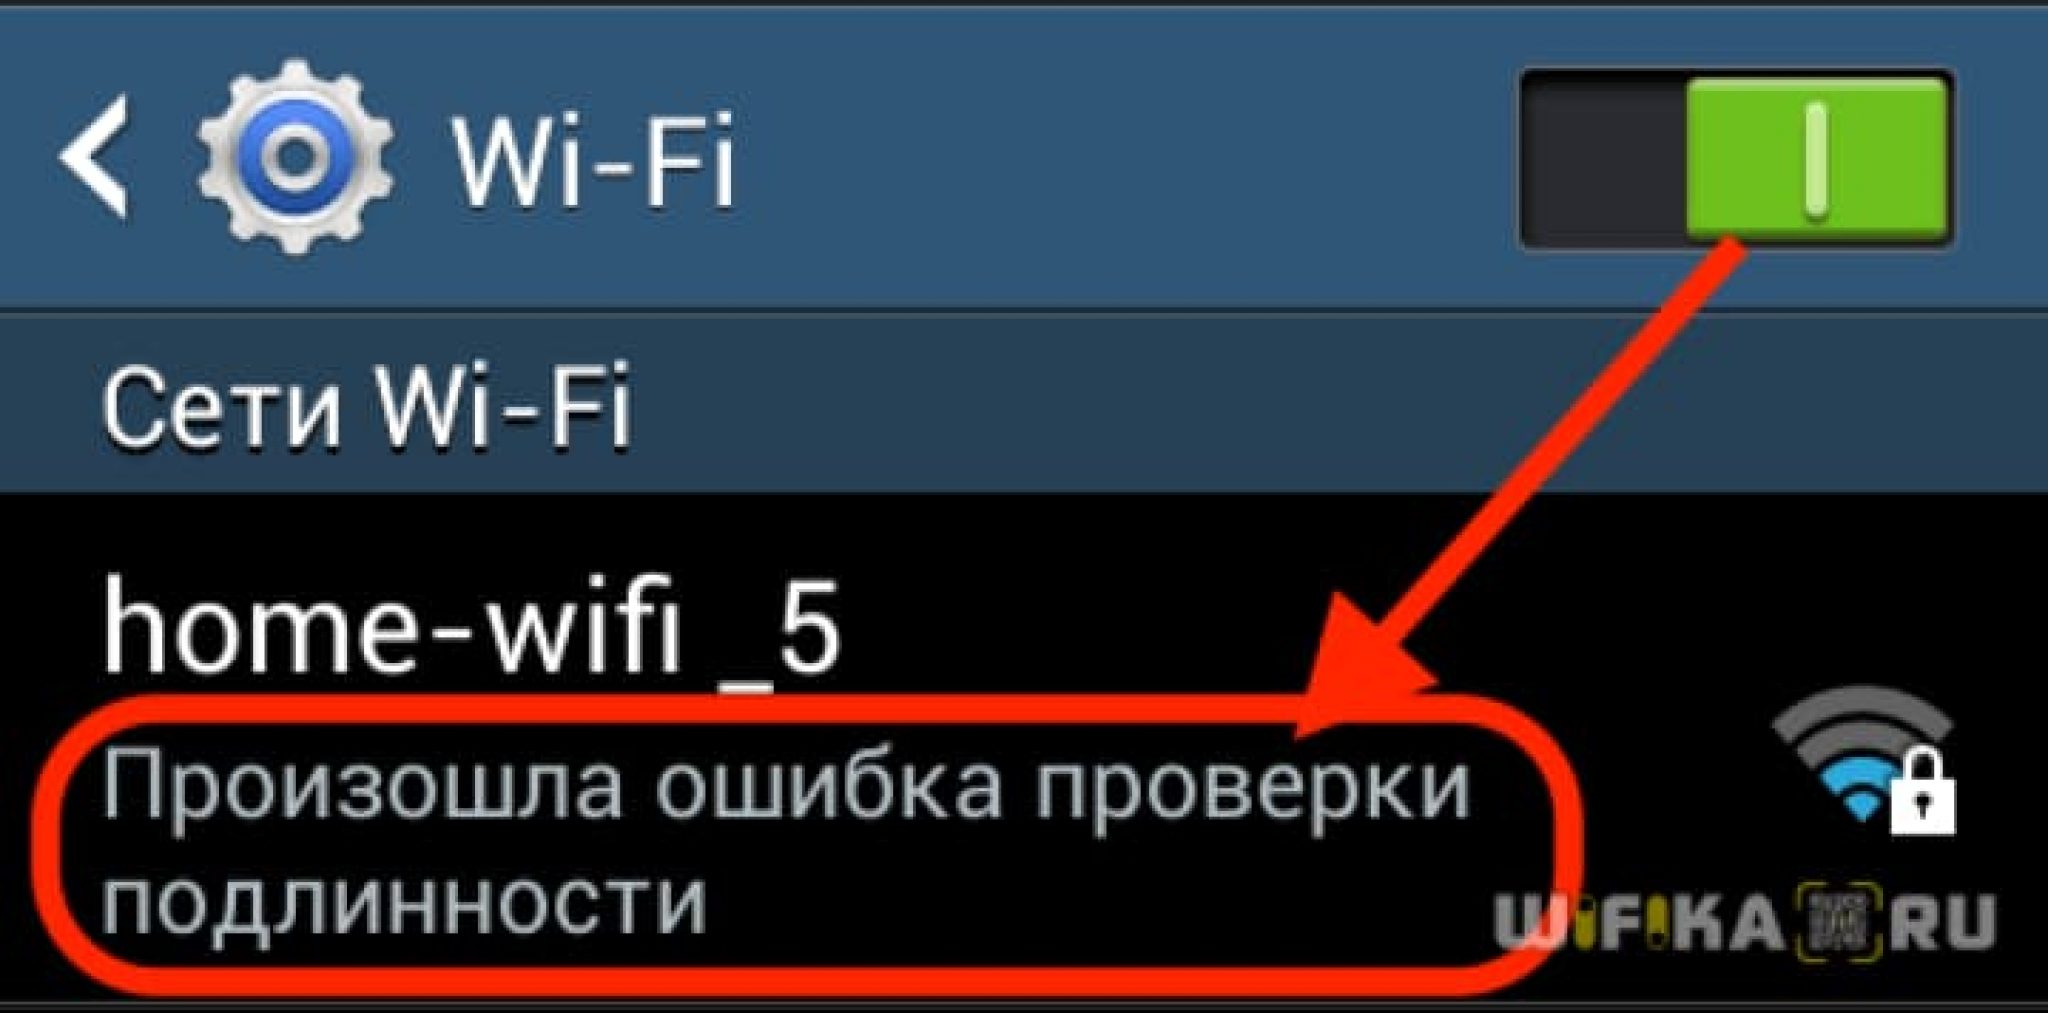 Ошибка подключения wifi на телефоне. Произошла ошибка проверки подлинности. Проверка подлинности WIFI. Произошла ошибка подлинности WIFI на телефоне. Произошла ошибка проверки подлинности при подключении WIFI.